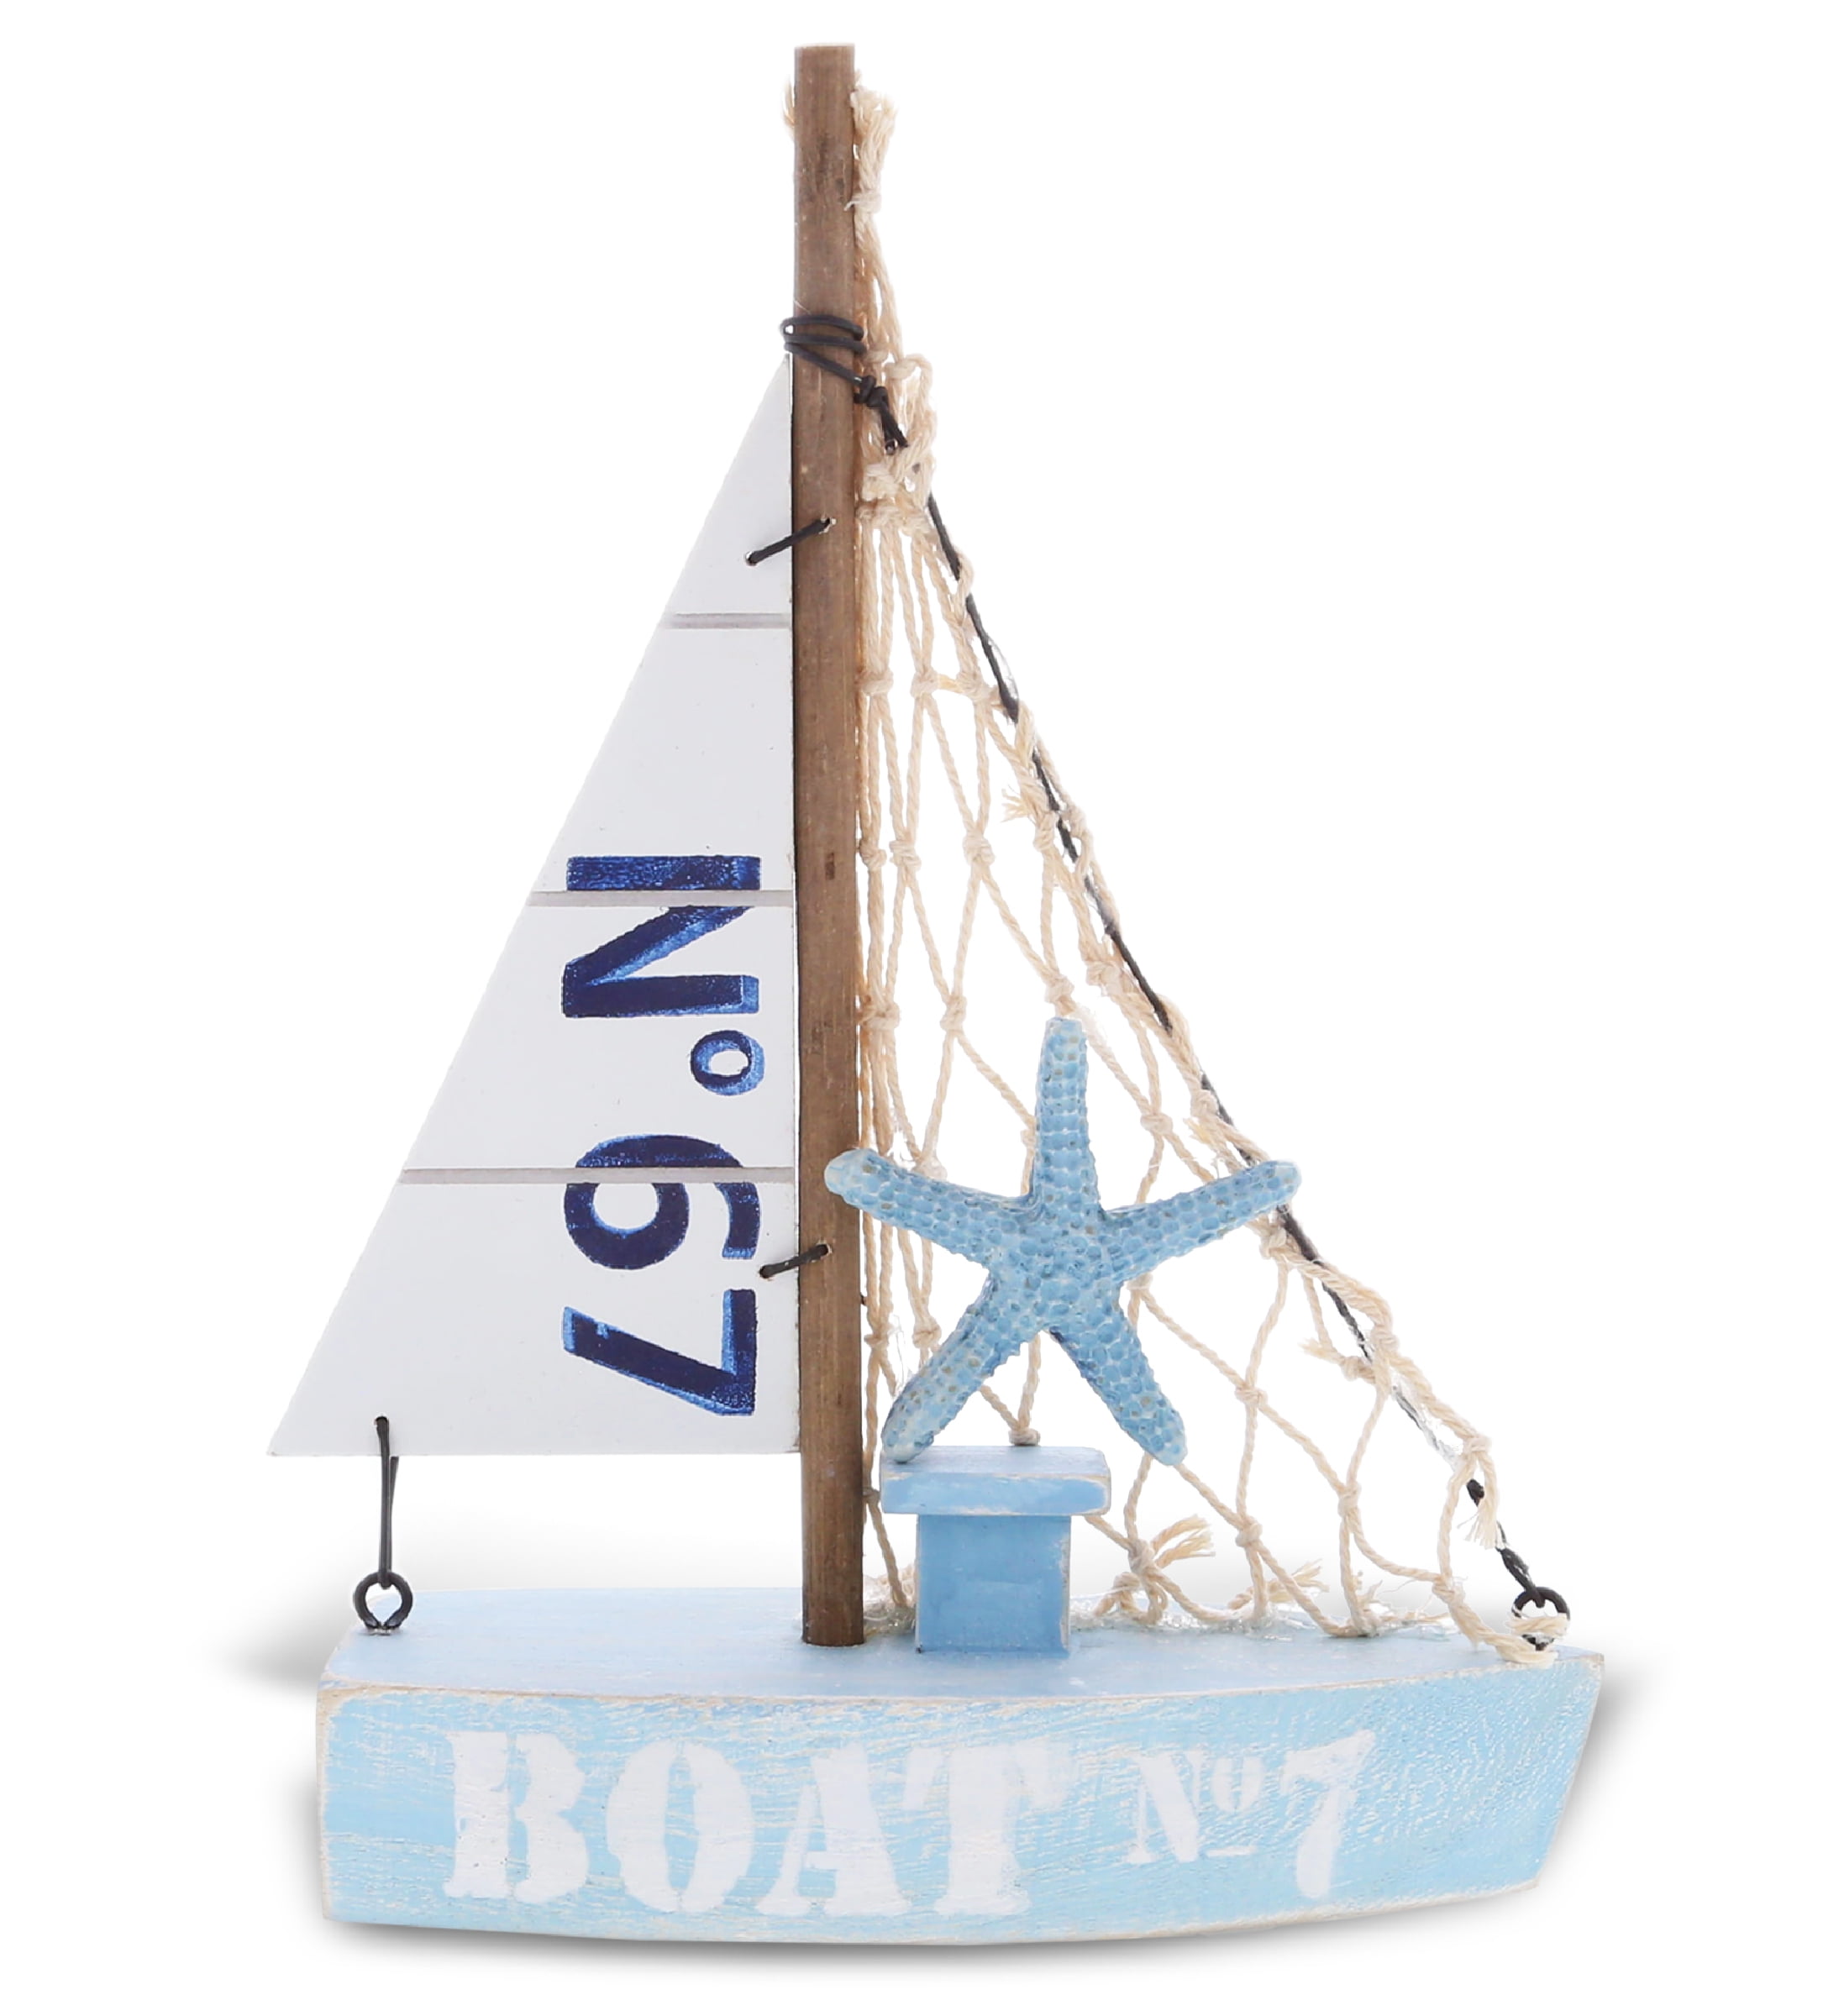 CoTa Global Blue Mist Sailboat Decor – Handmade Wooden Boat Decor, Cute  Beach Style Model Sail Boat Decorations, Nautical Themed Table Top Decor